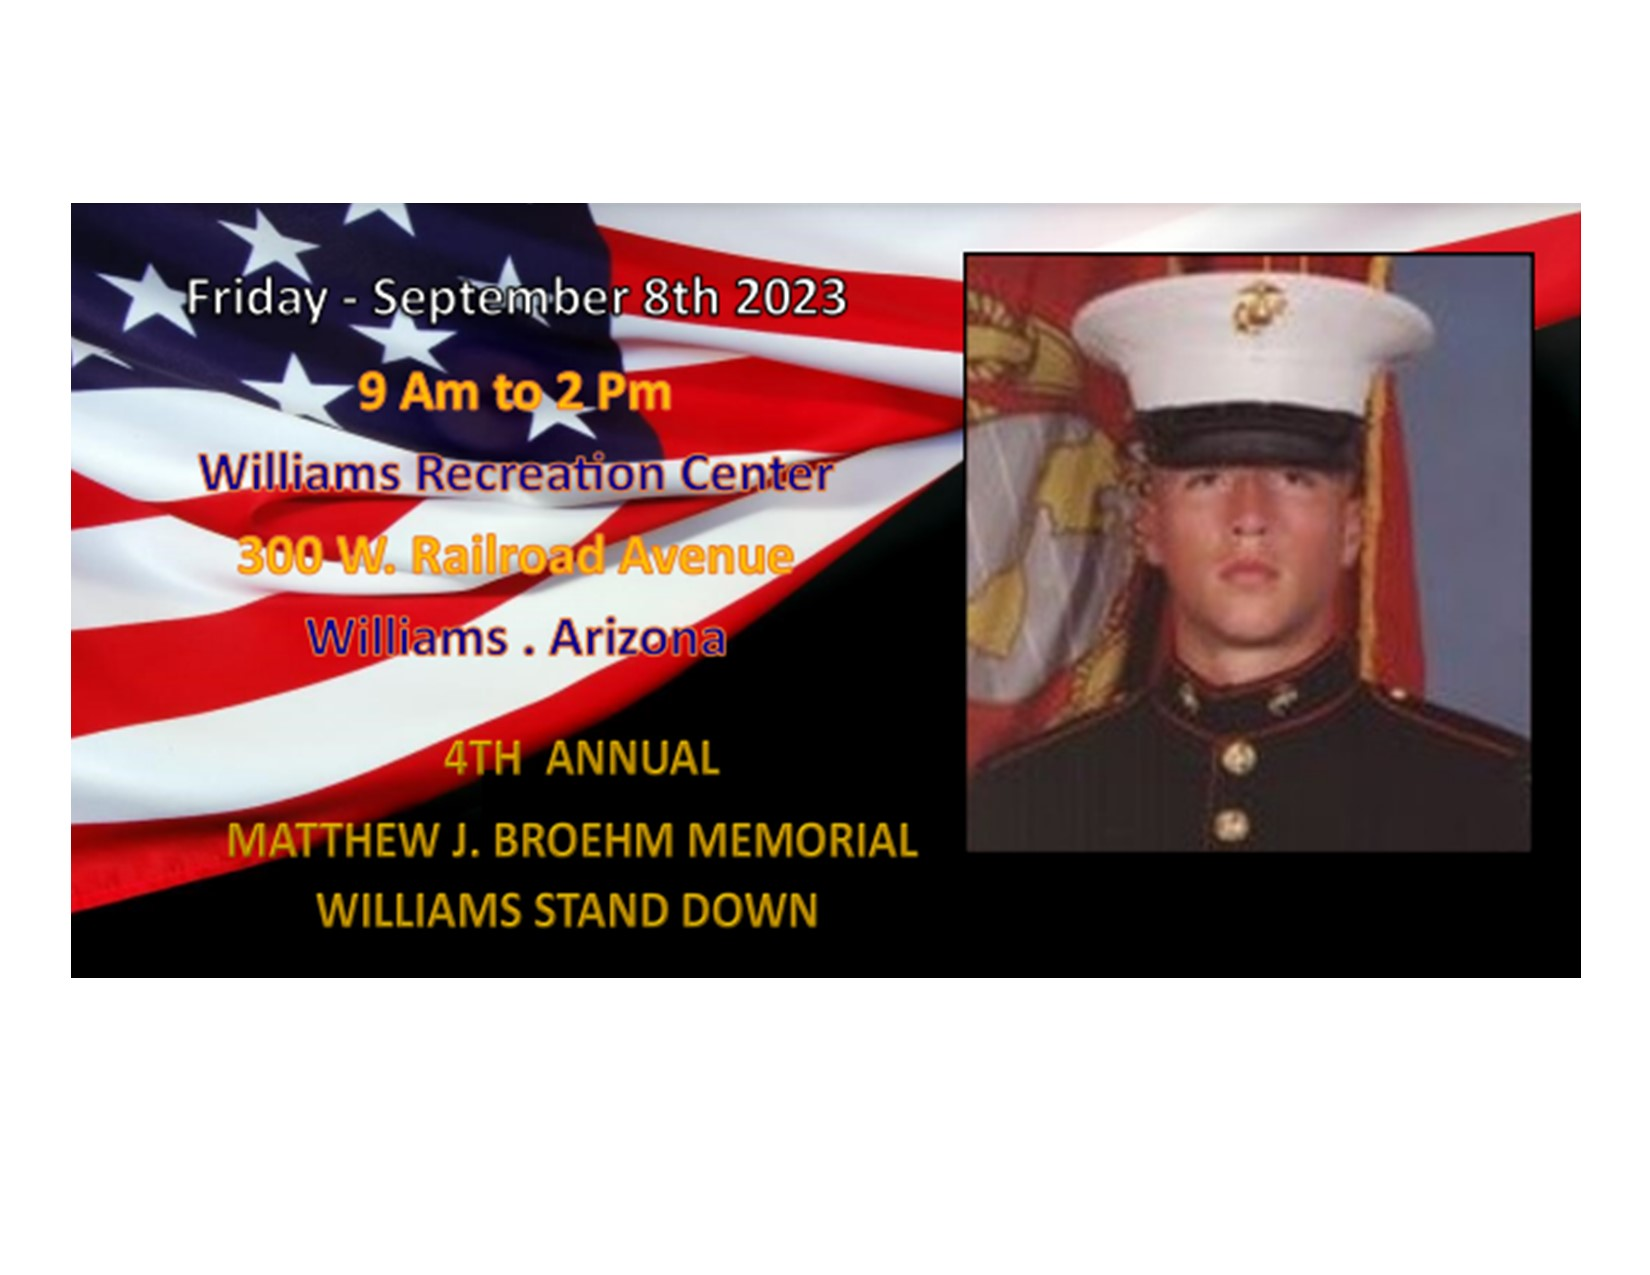 4th Annual Matthew J. Broehm Memorial Williams Stand Down